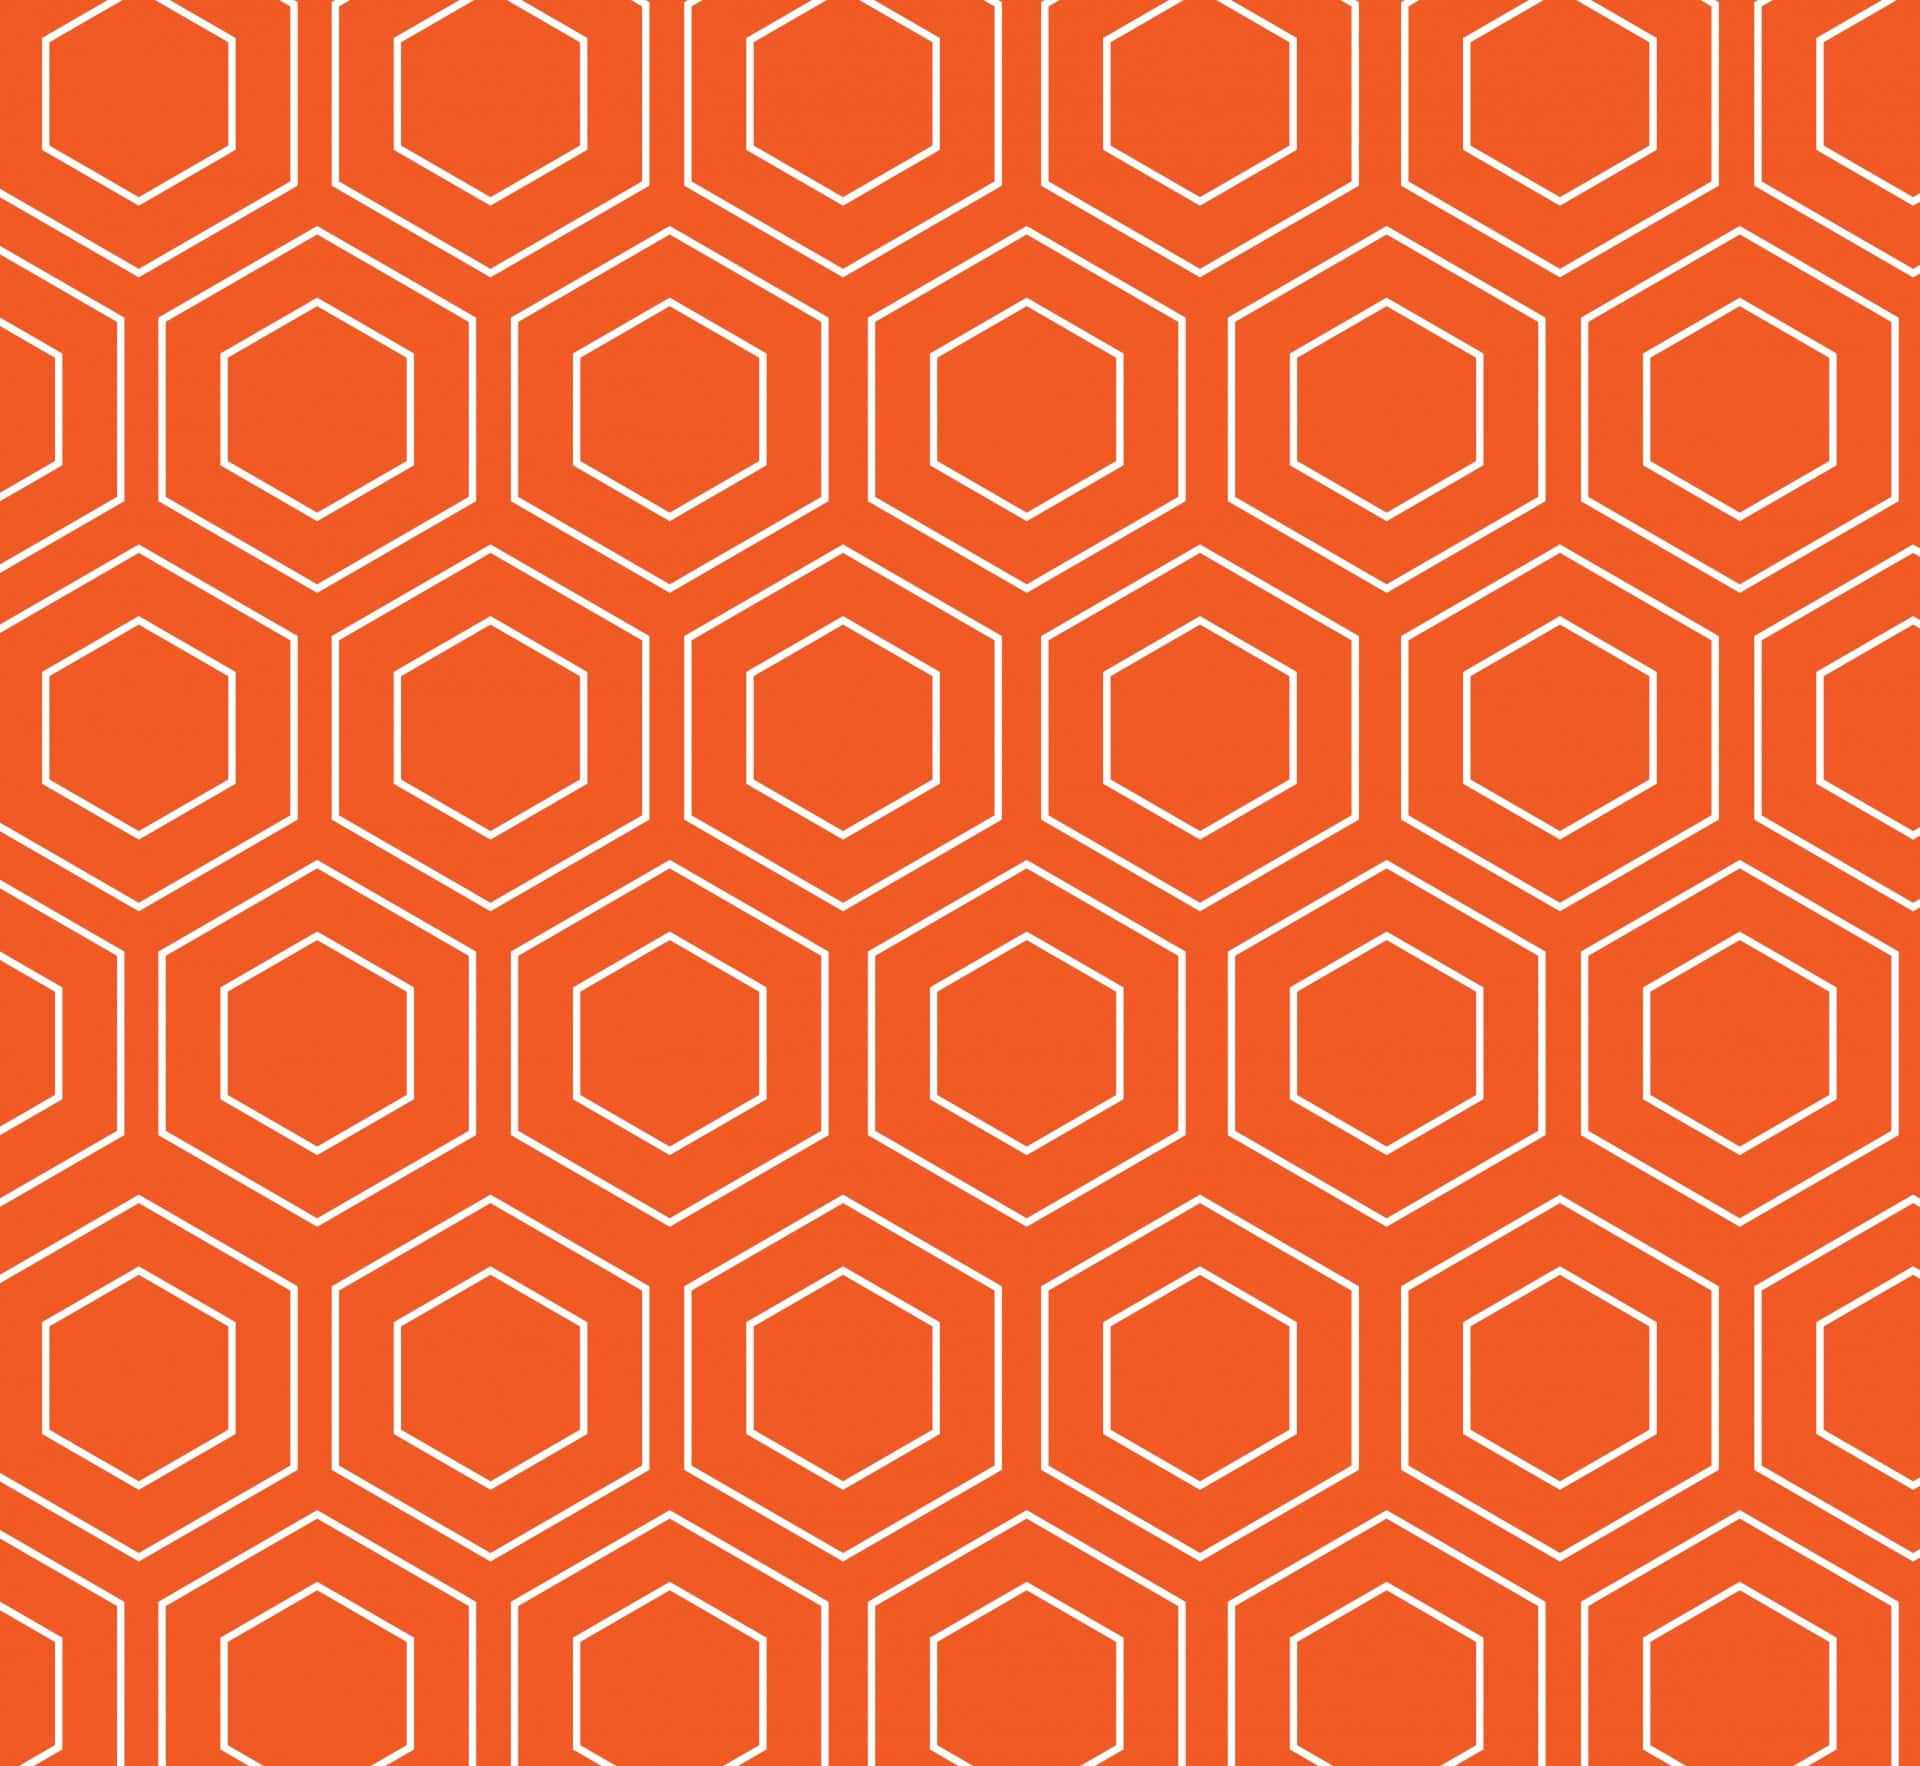 Imagende Patrón Geométrico Hexagonal En Color Naranja.